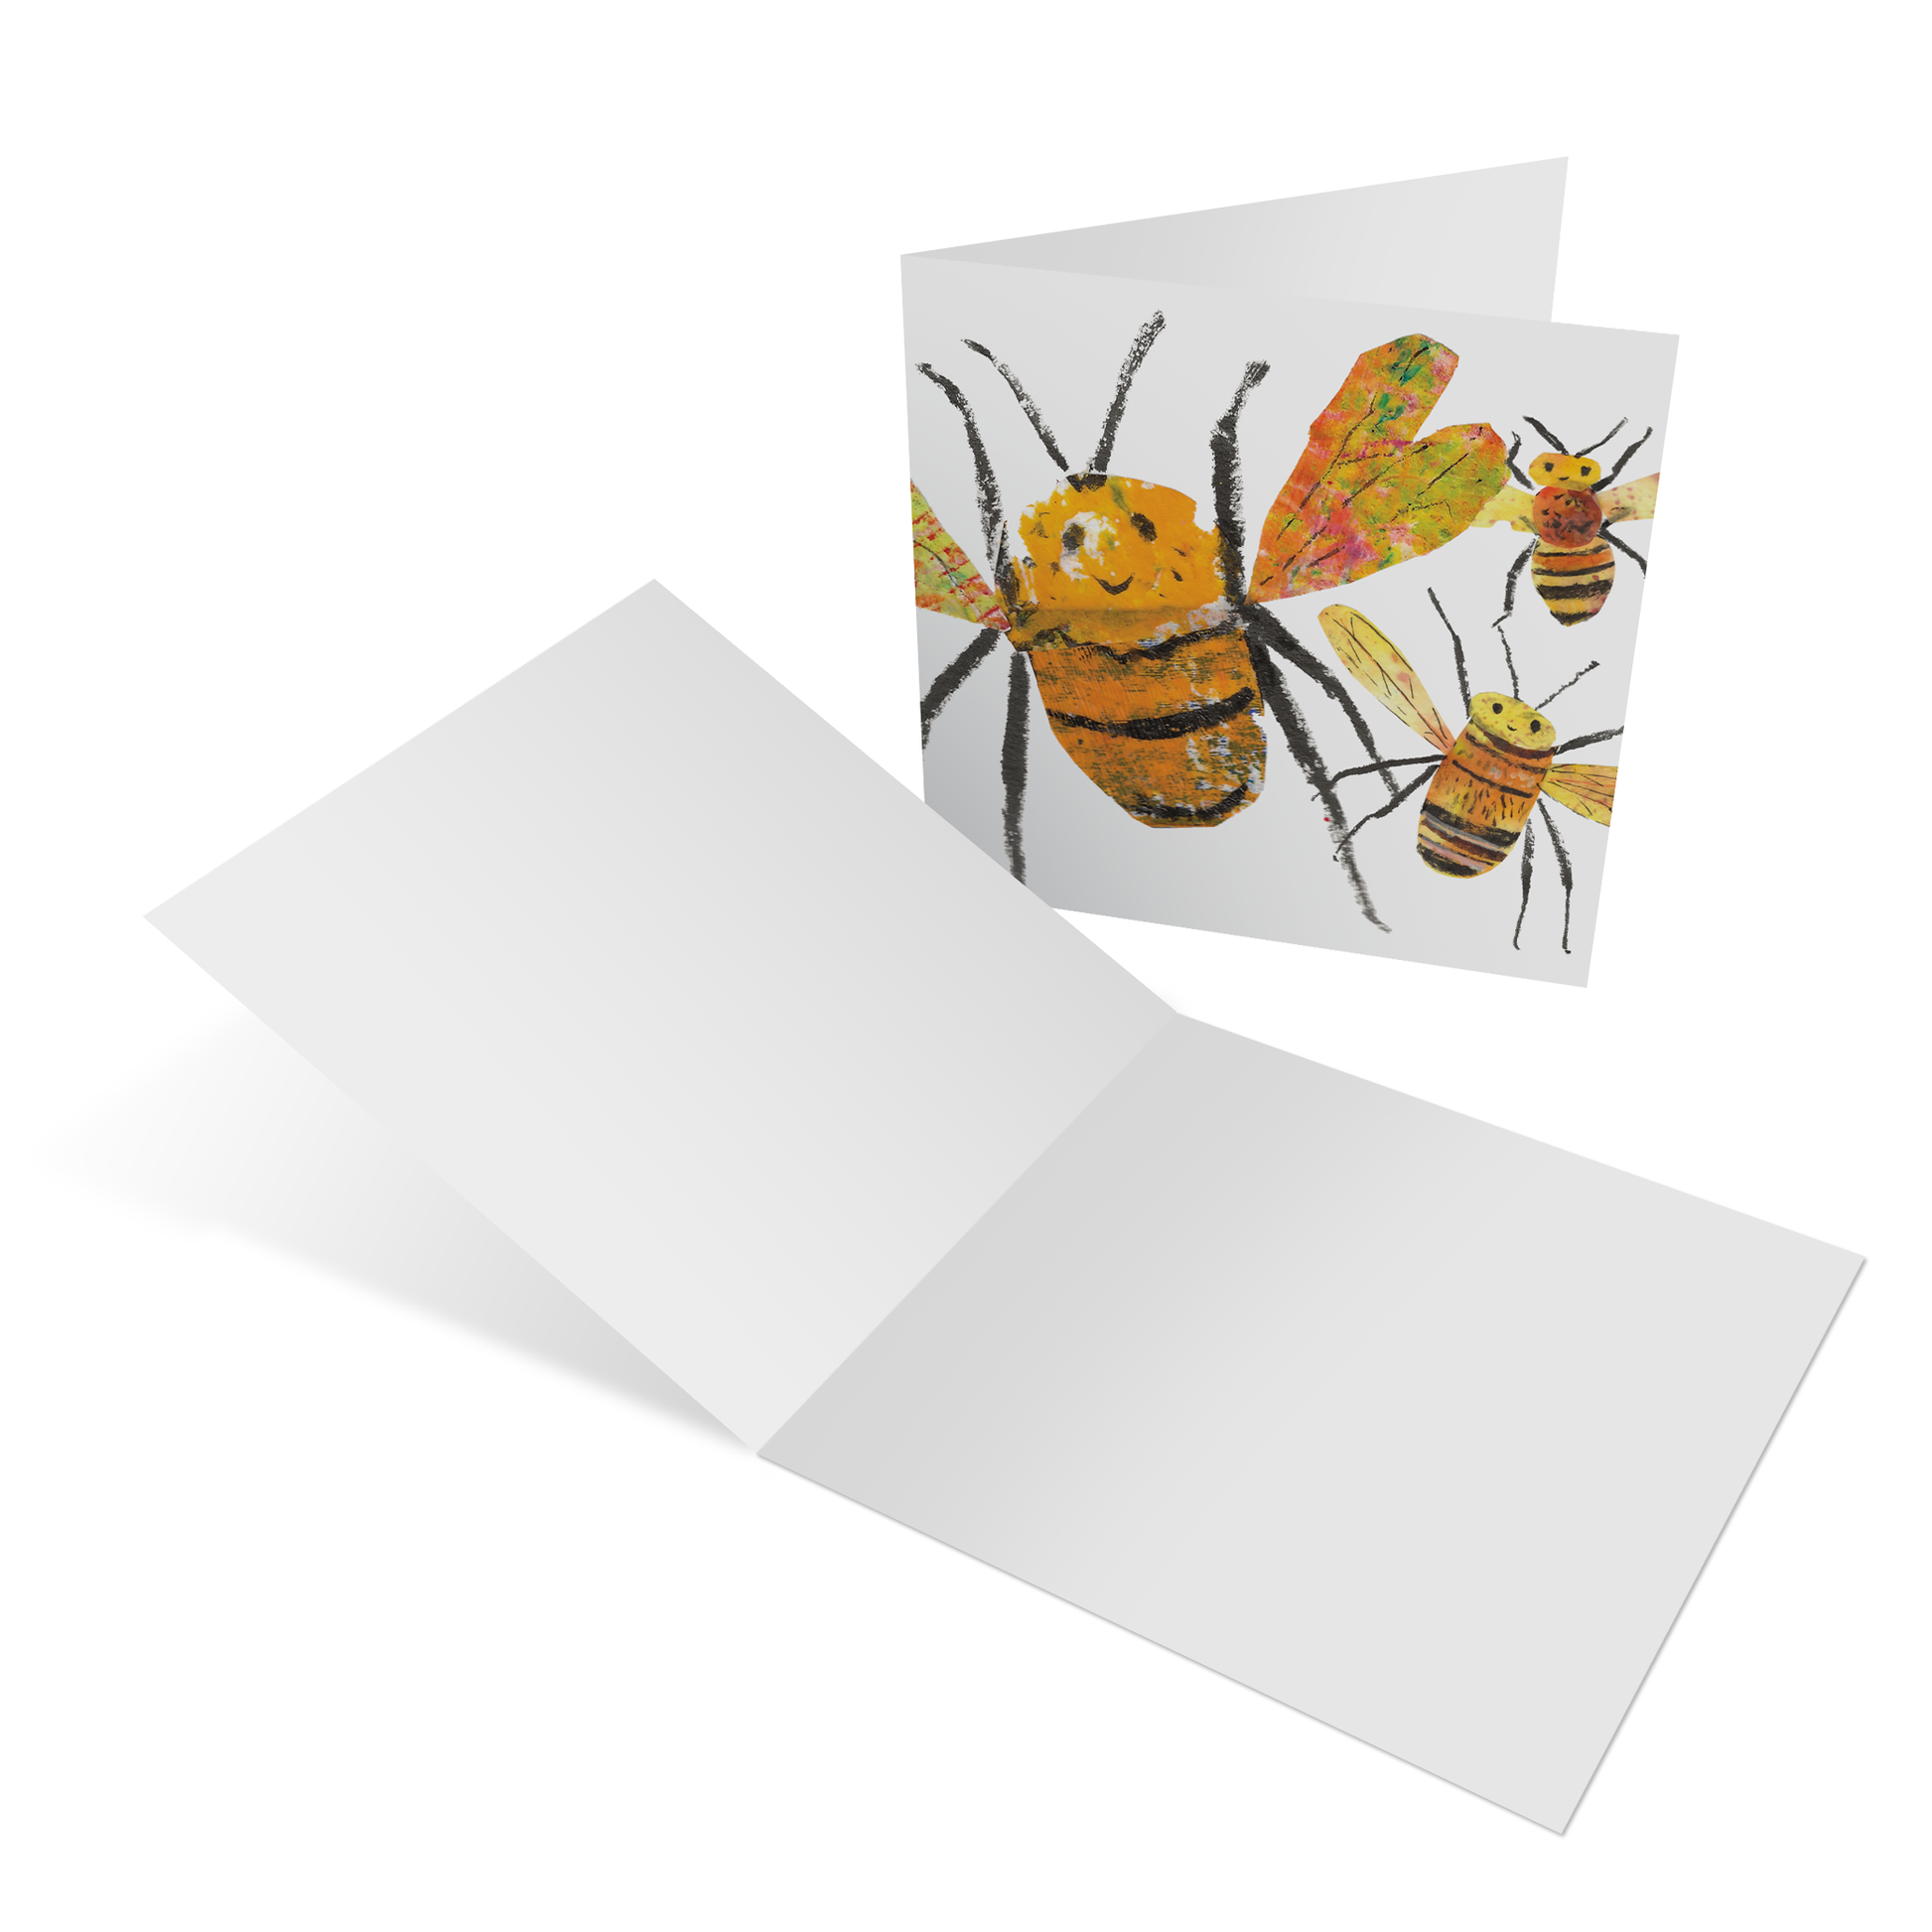 bee-ing together greetings card - Greetings Card - Sarah Millin